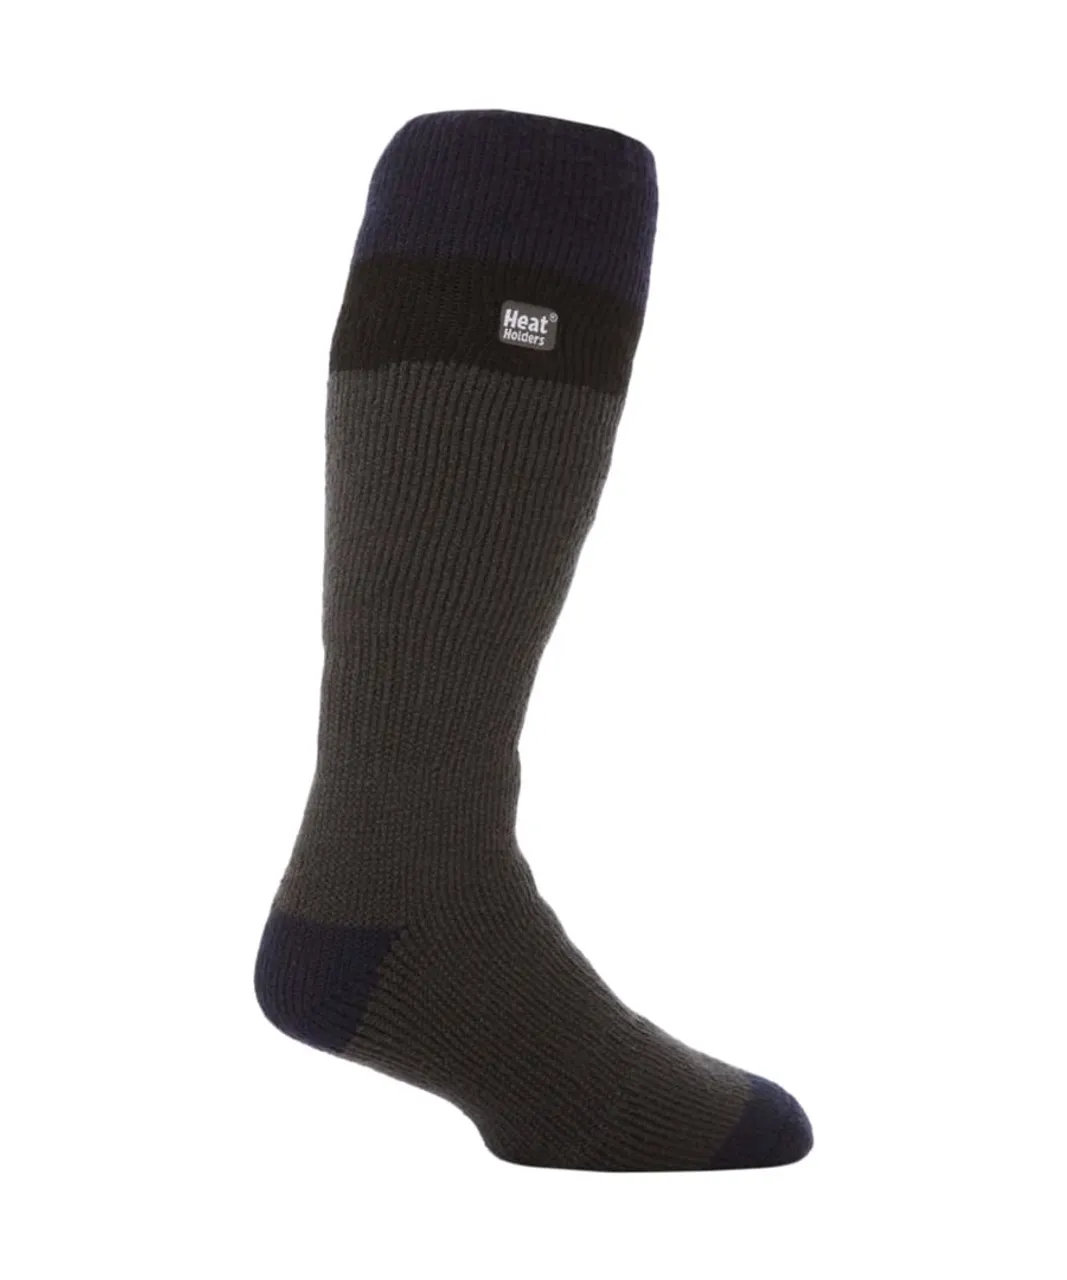 Heat Holders - Mens Extra Long 2.3 TOG Thermal Knee High Ski Socks - Grey